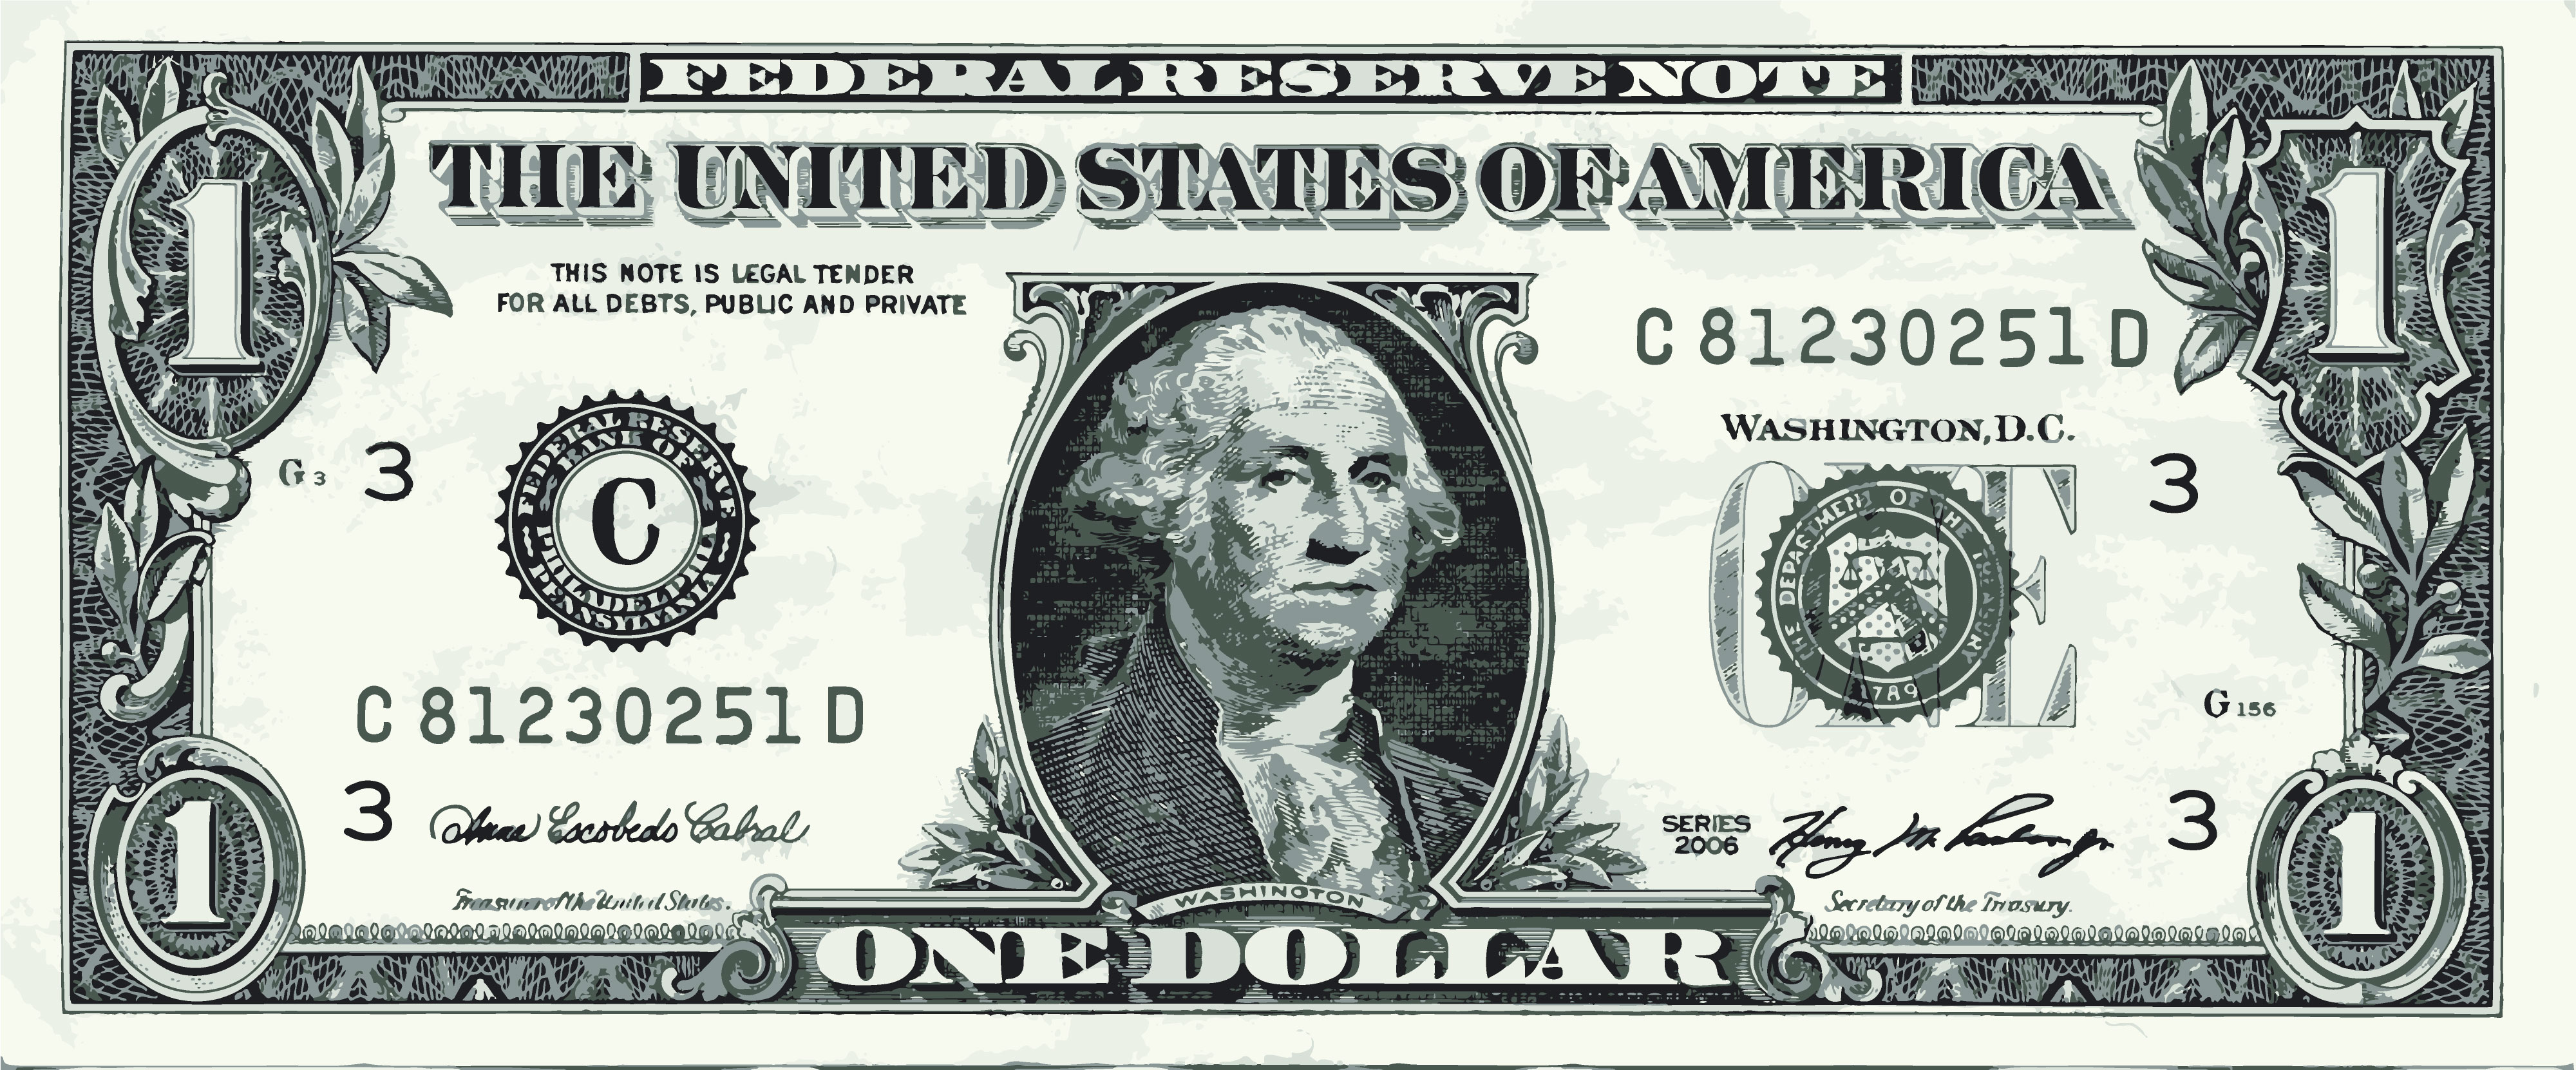 George Washington One Dollar Bill Vector Graphic Art | Free Vector ...